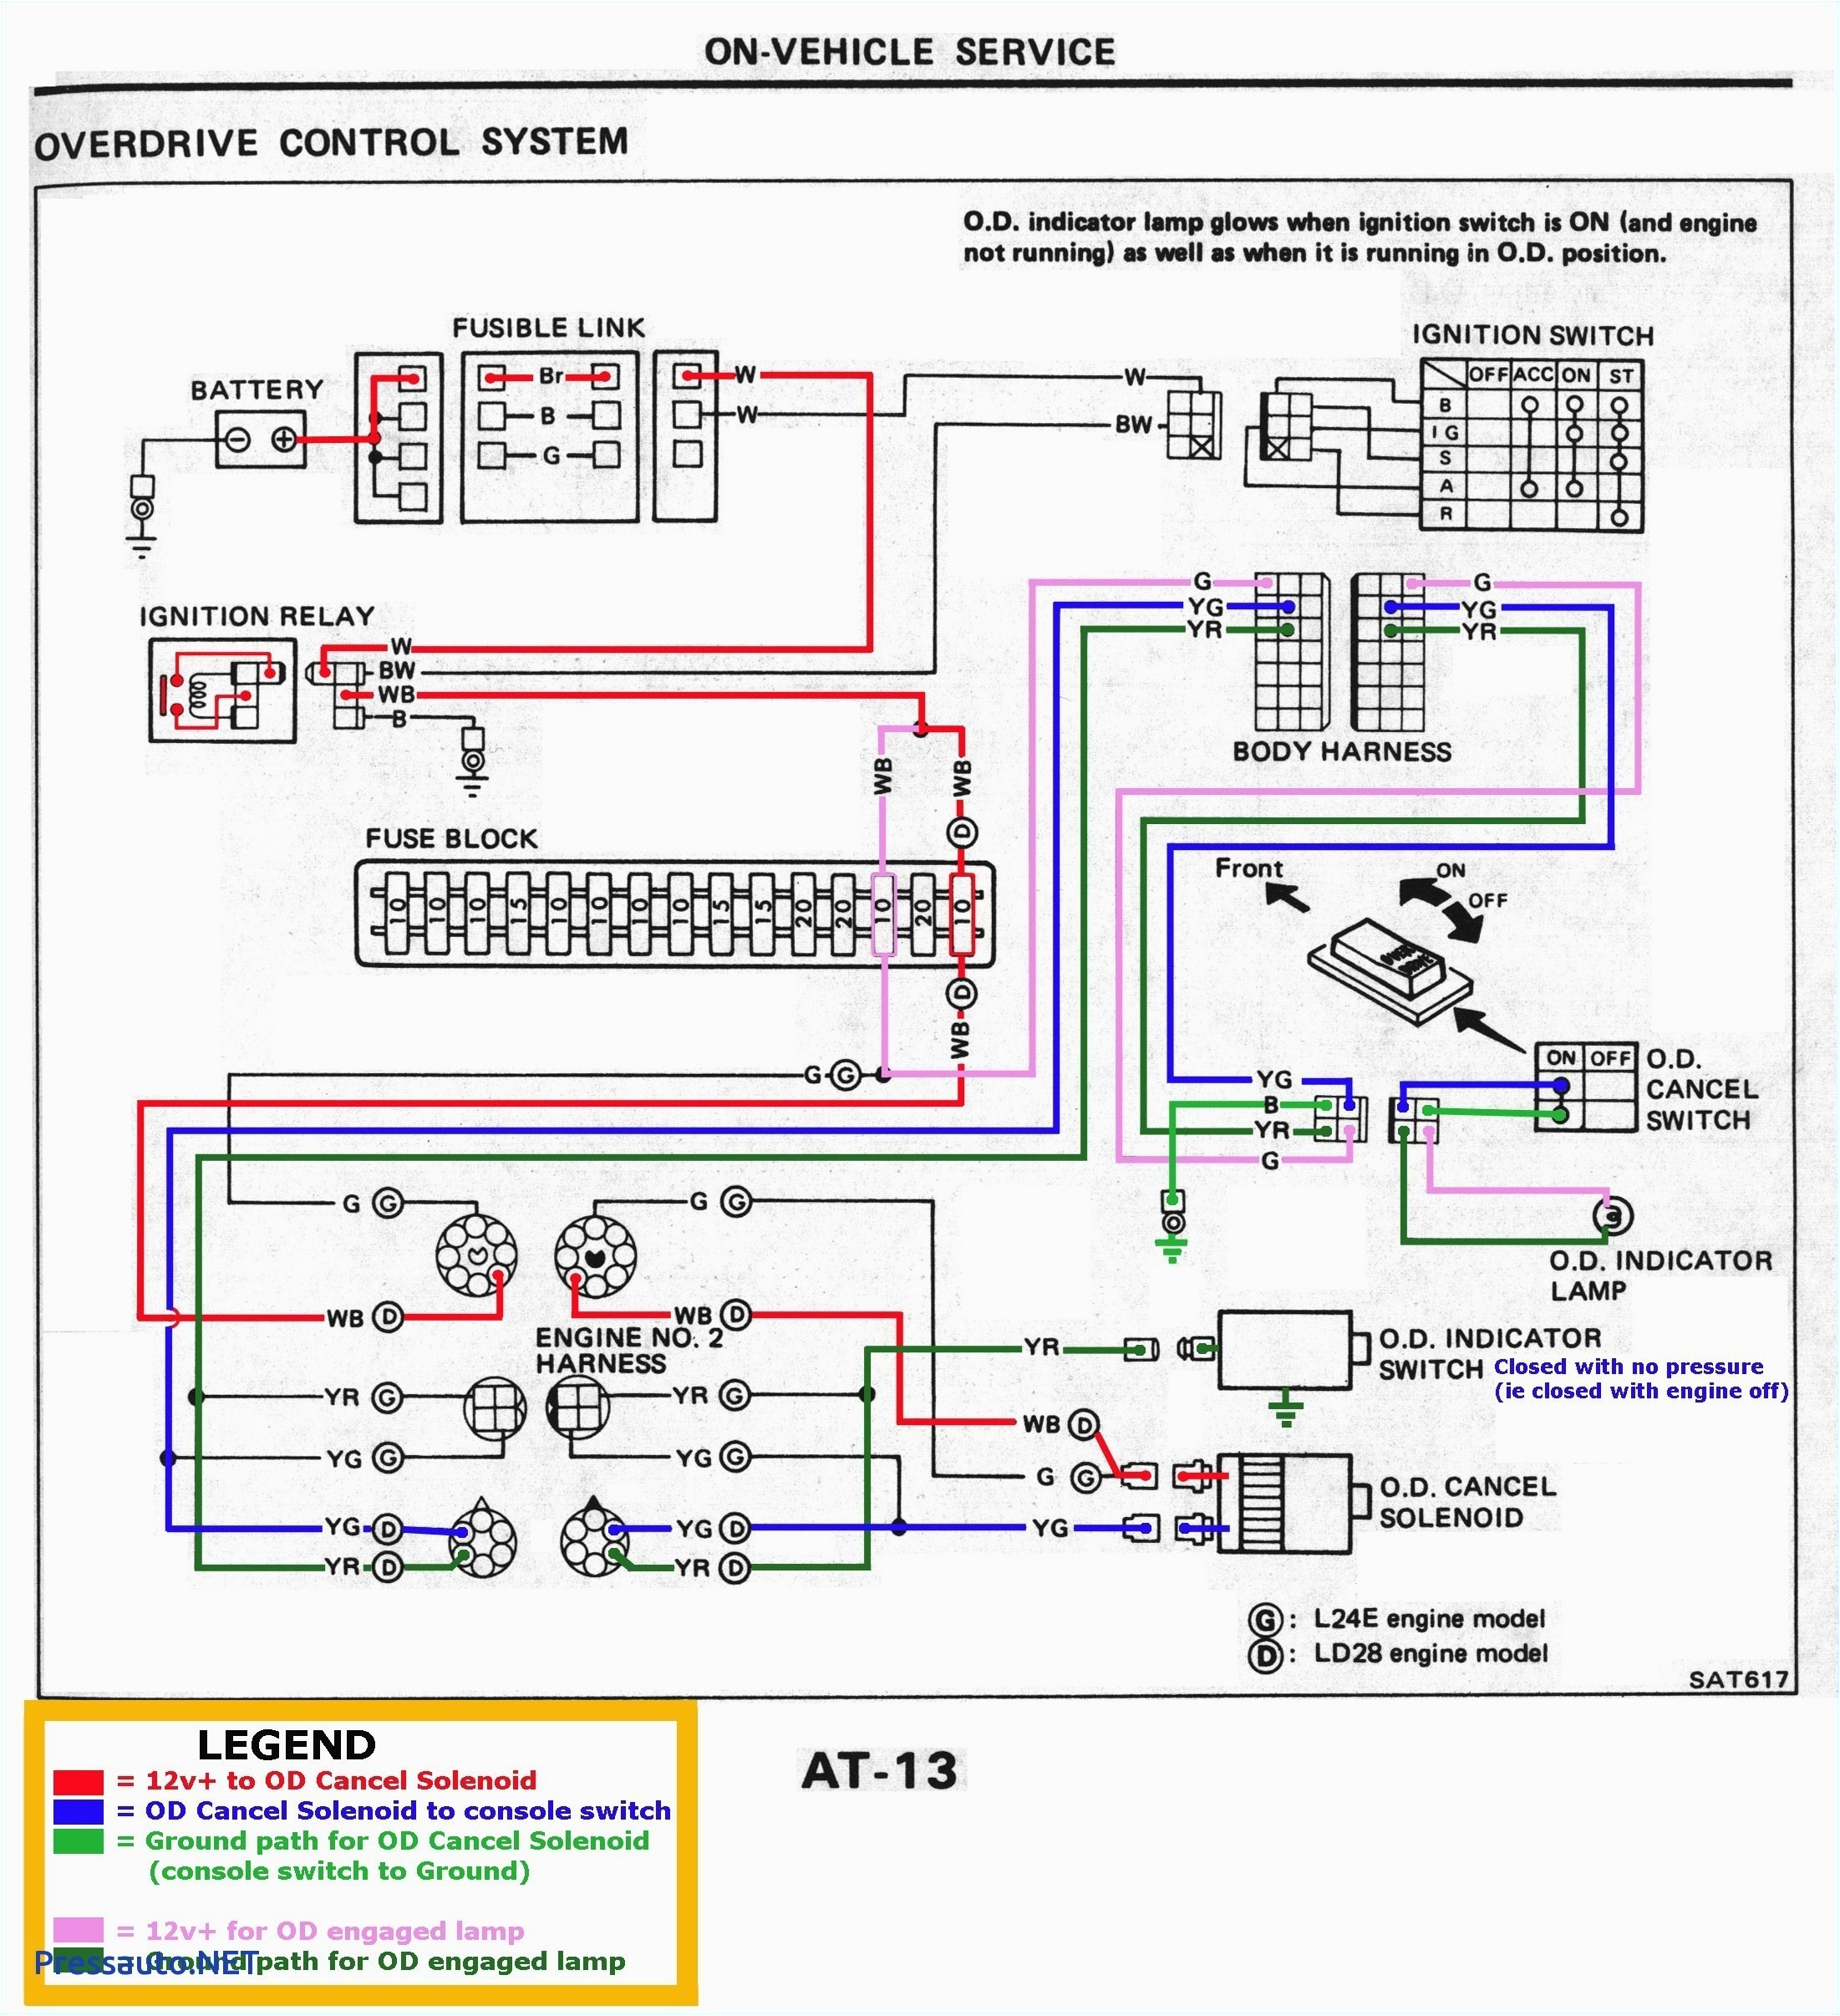 anti theft wiring diagram 2001 chevy silverado wiring diagram rows 2009 civic anti theft wiring diagram